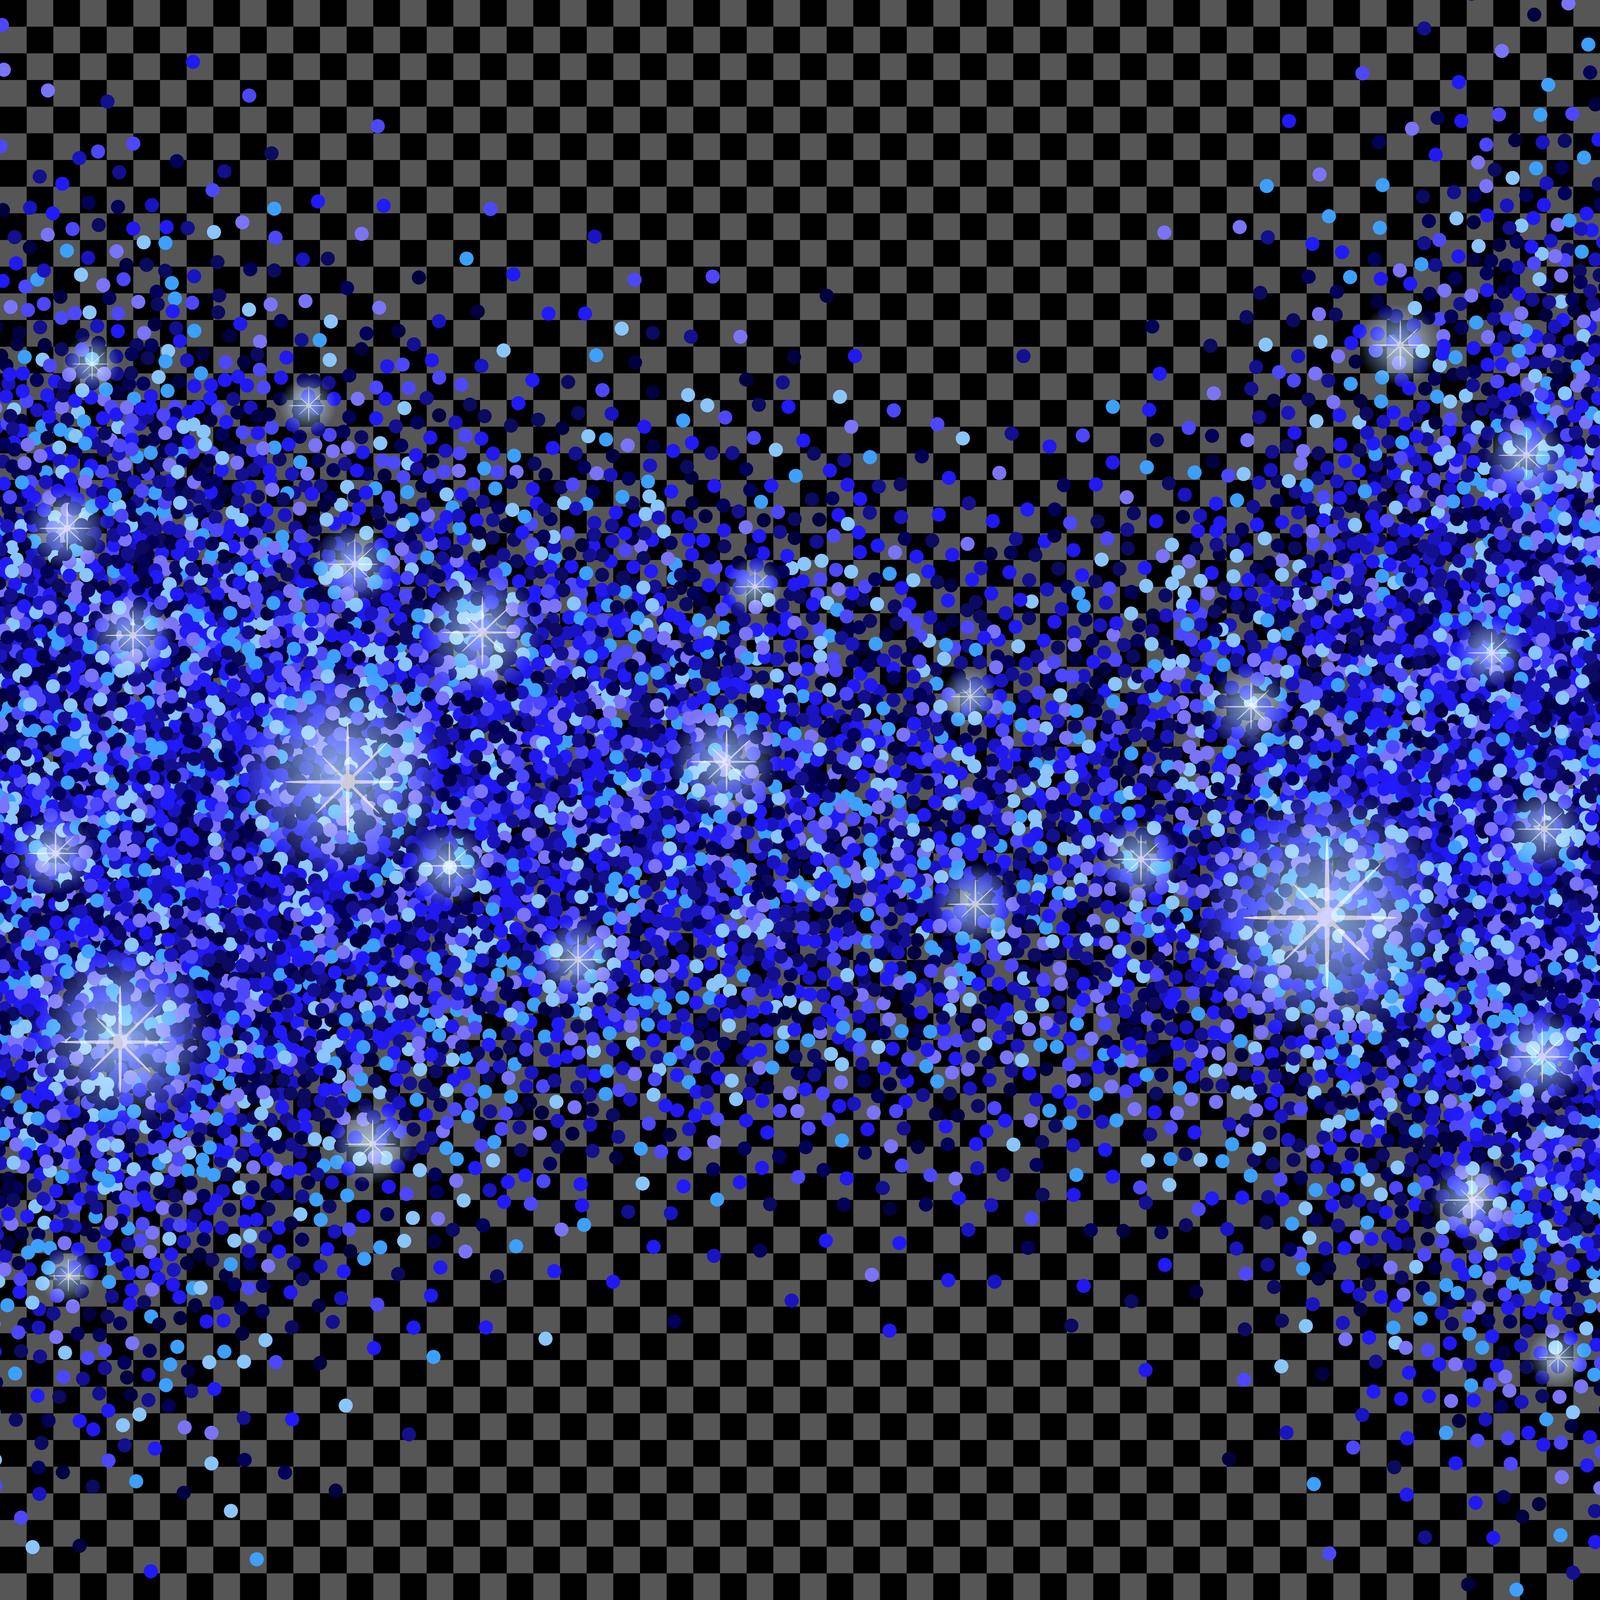 Dark transparent background with blue glitter sparkles or confetti.